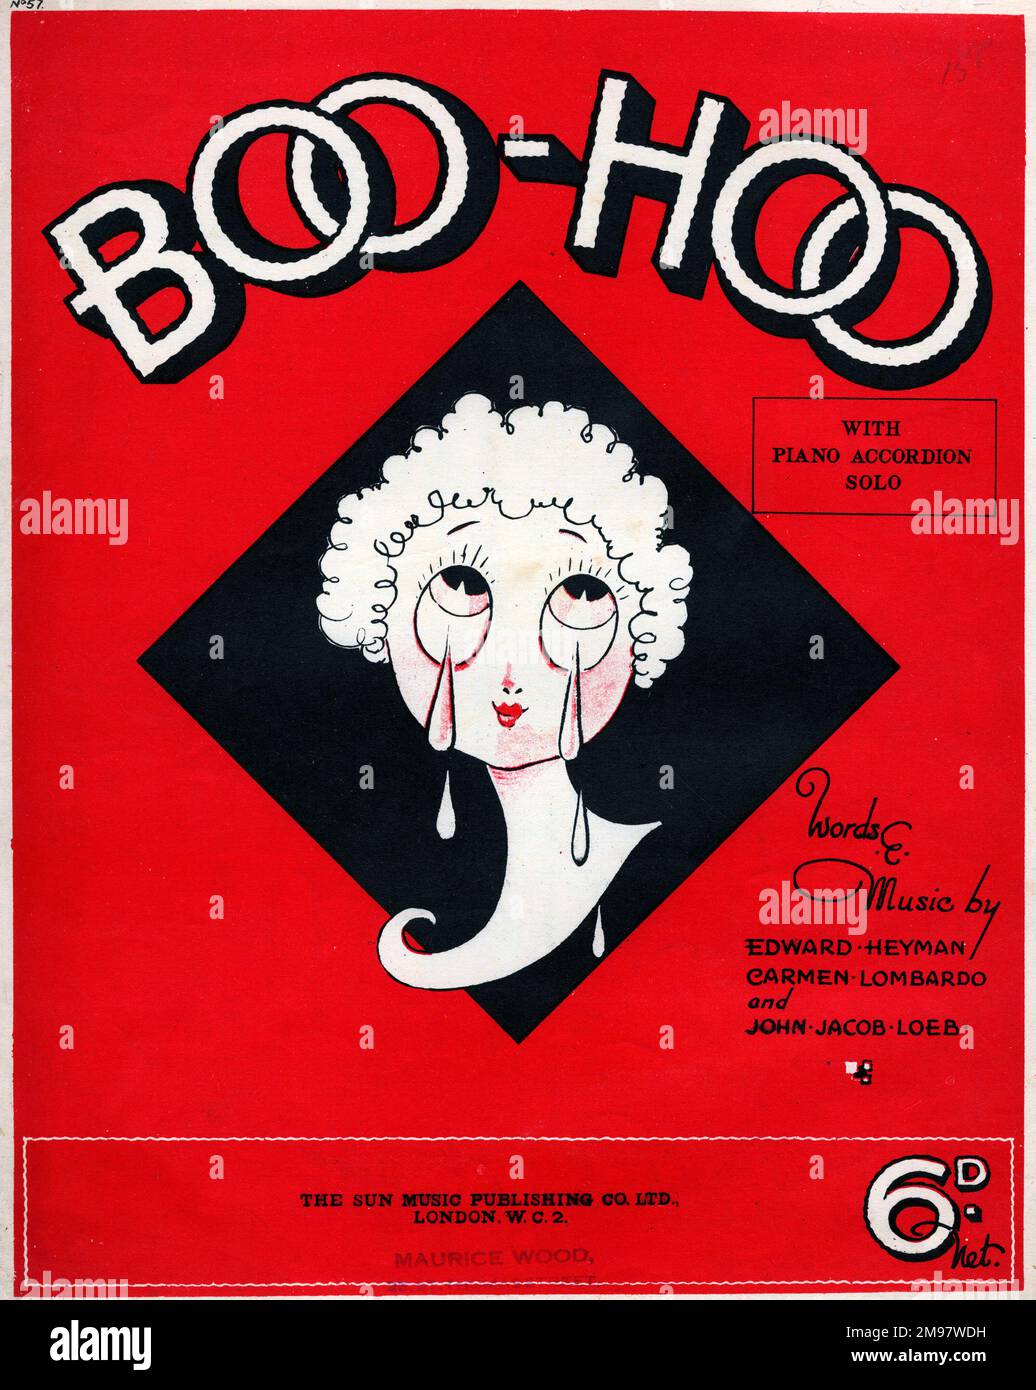 Copertina musicale, Boo-Hoo (You've Got Me gridare per te), parole e musica di Edward Heyman, Carmen Lombardo e John Jacob Loeb. Foto Stock